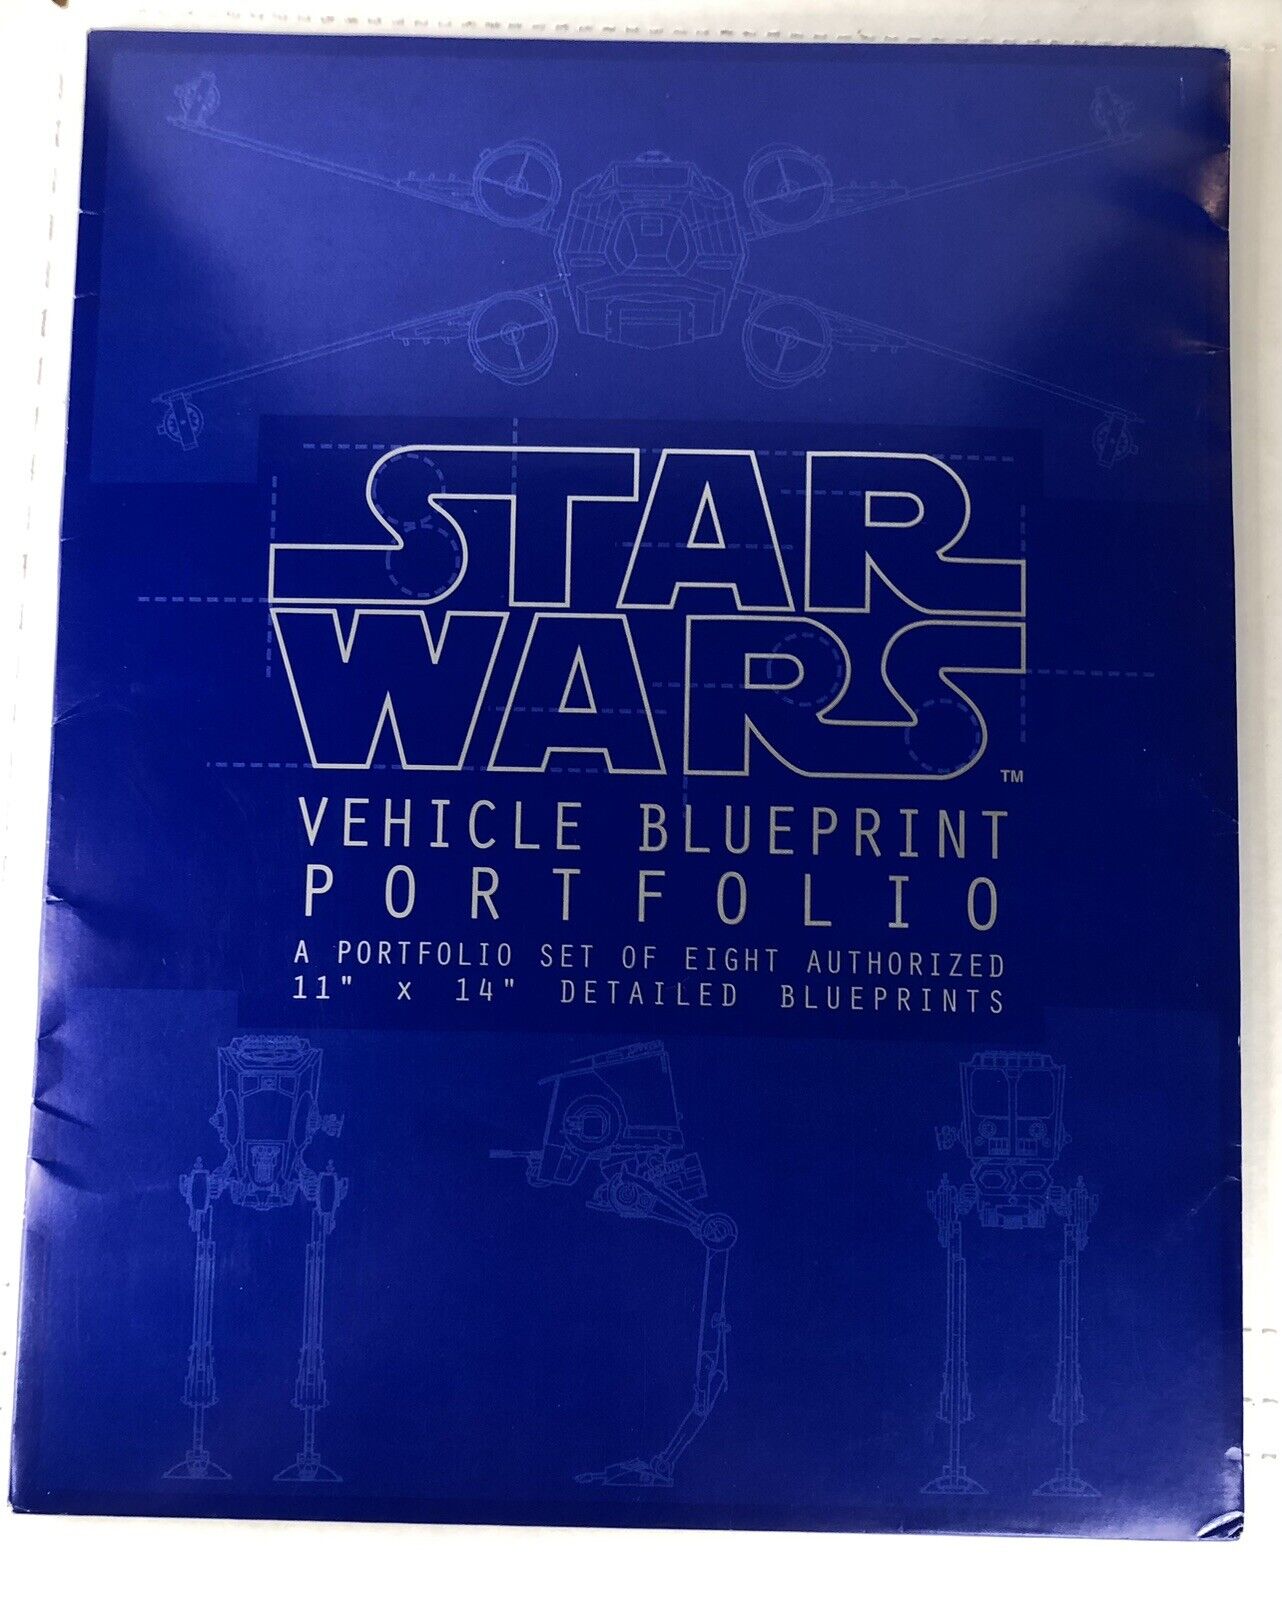 Star Wars Blueprint Portfolio Vehicle Blueprints Set of 8 in Folder